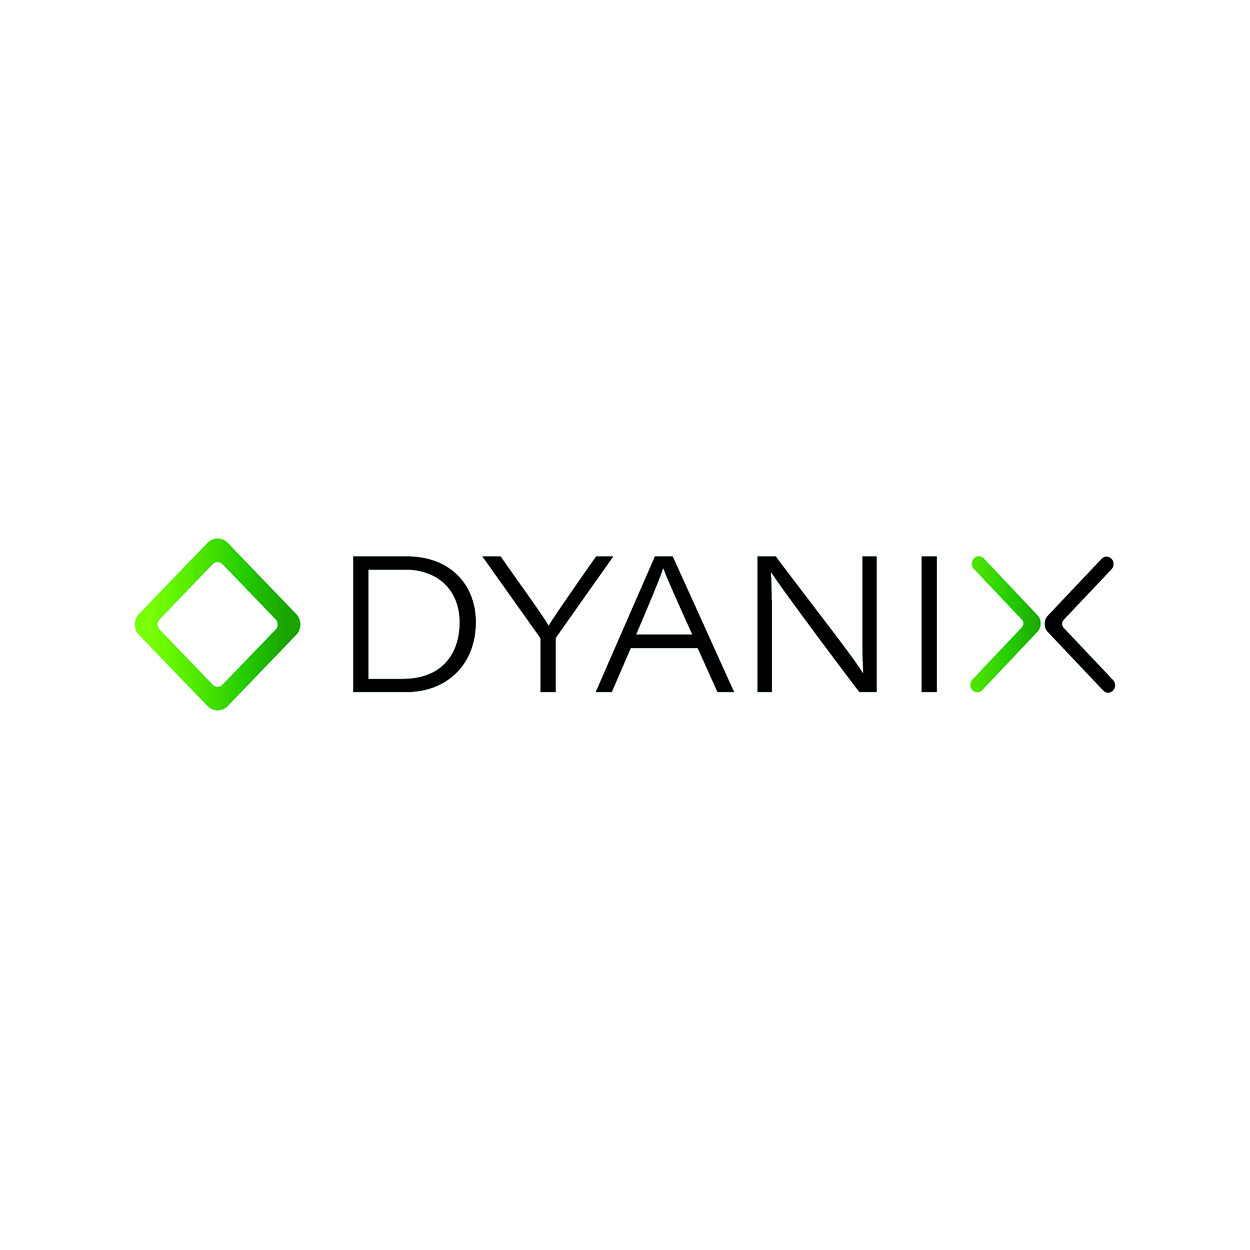 Dyanix adds no-code platform Triggre to its solutions portfolio